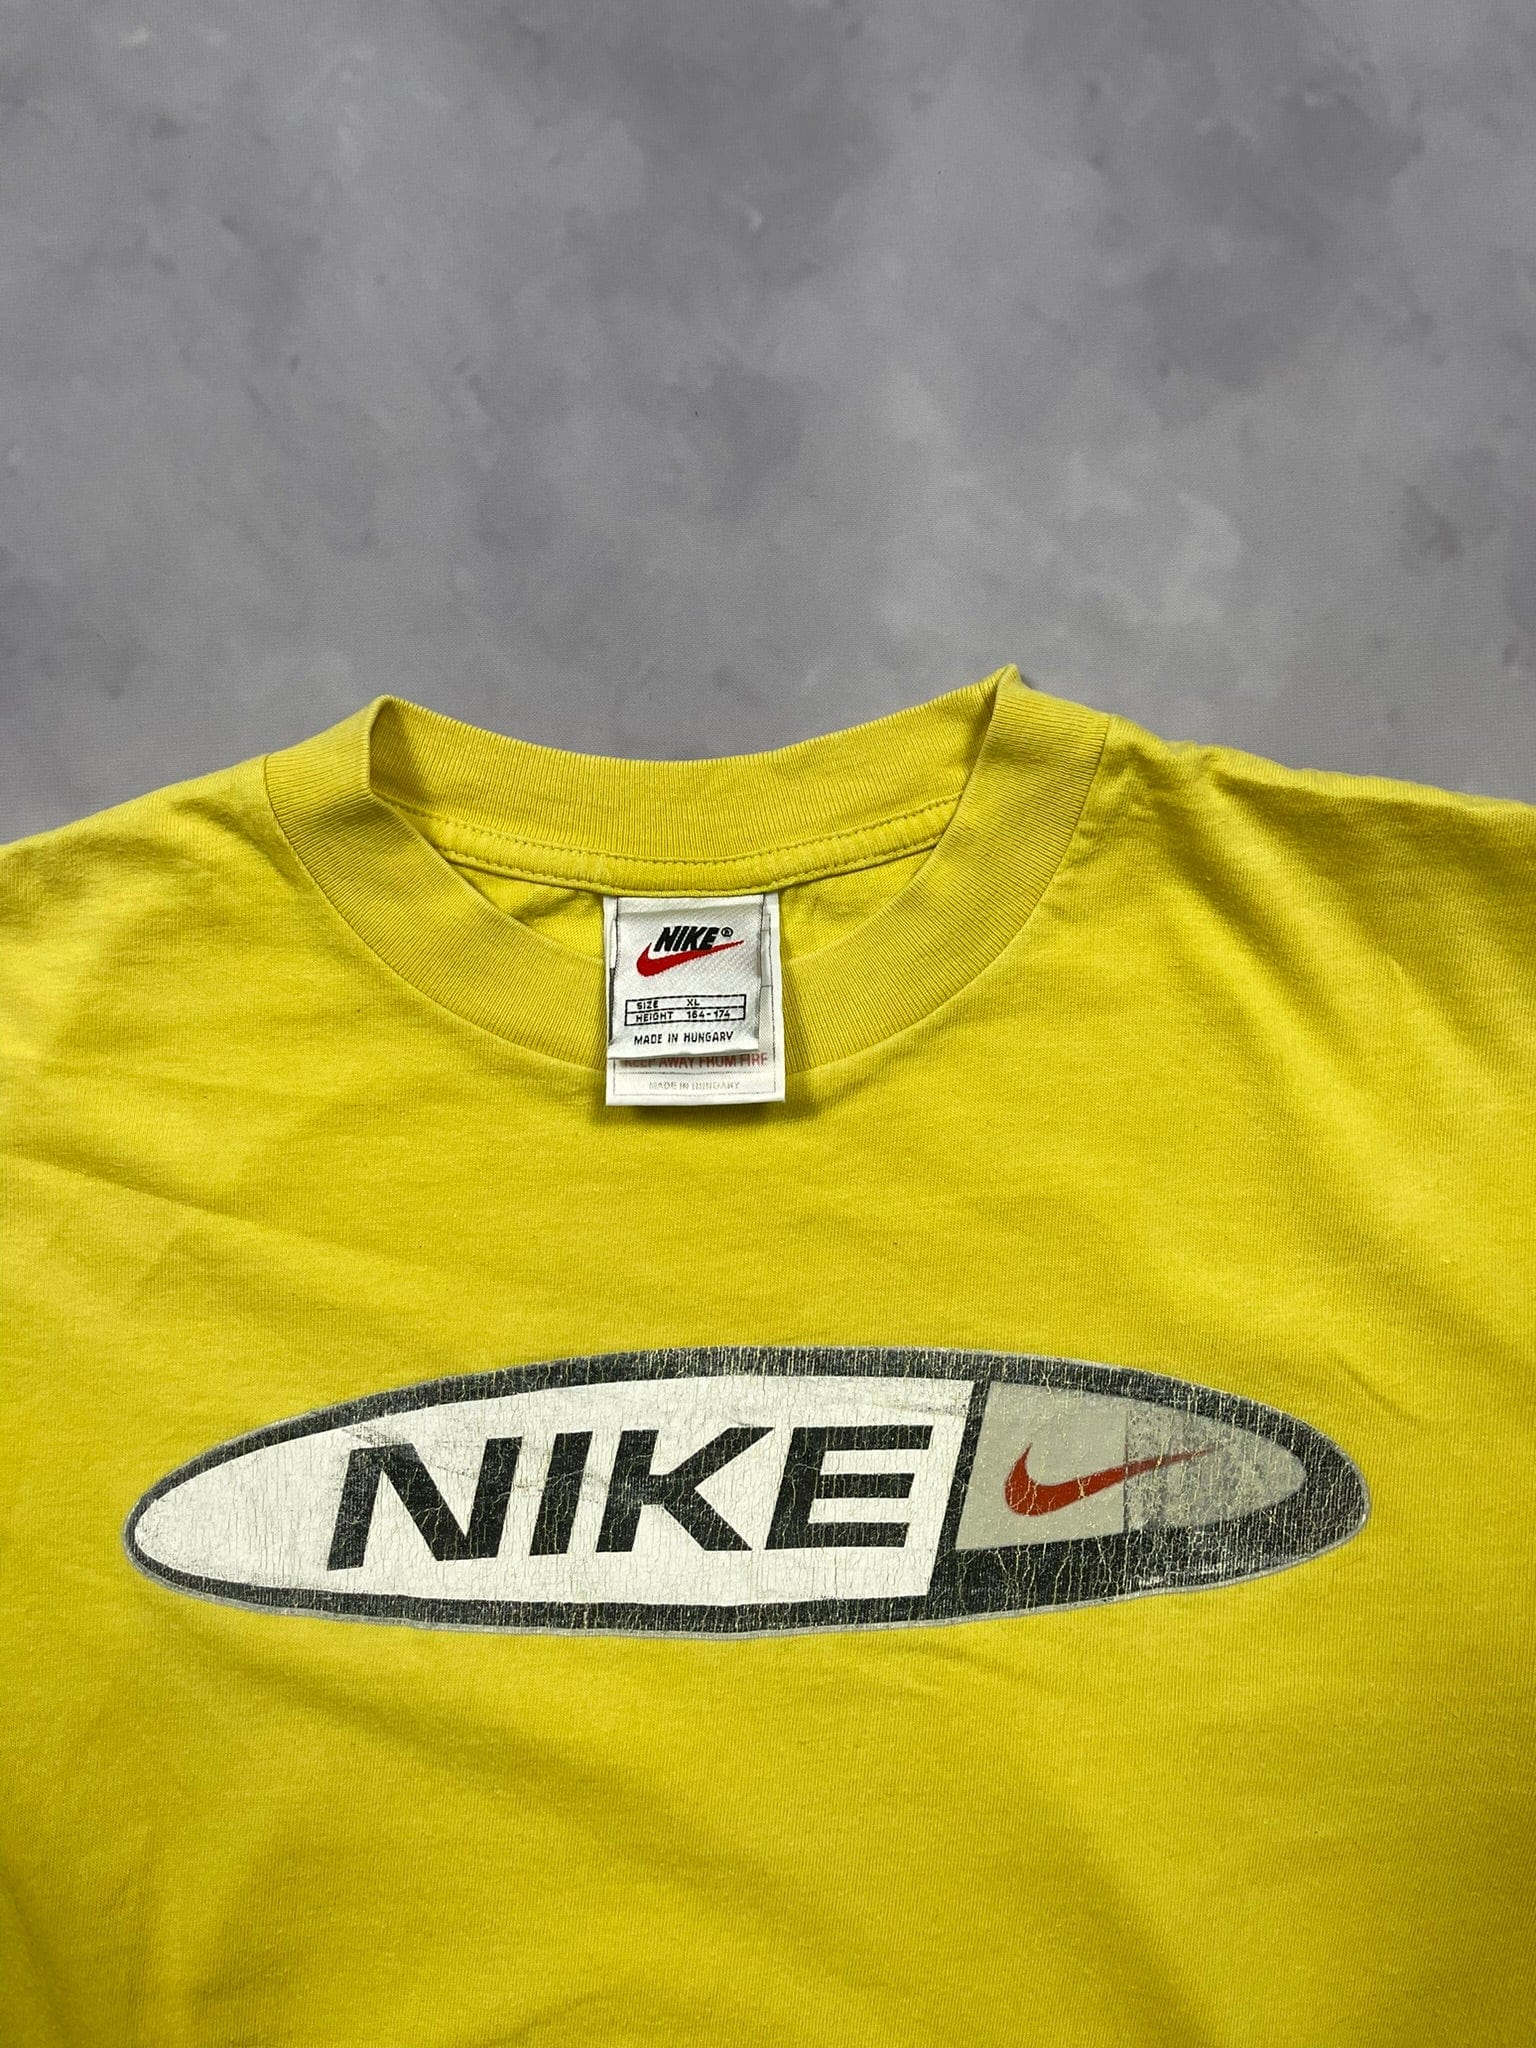 The Vintage Racks T-Shirt Nike Chest Logo - Small